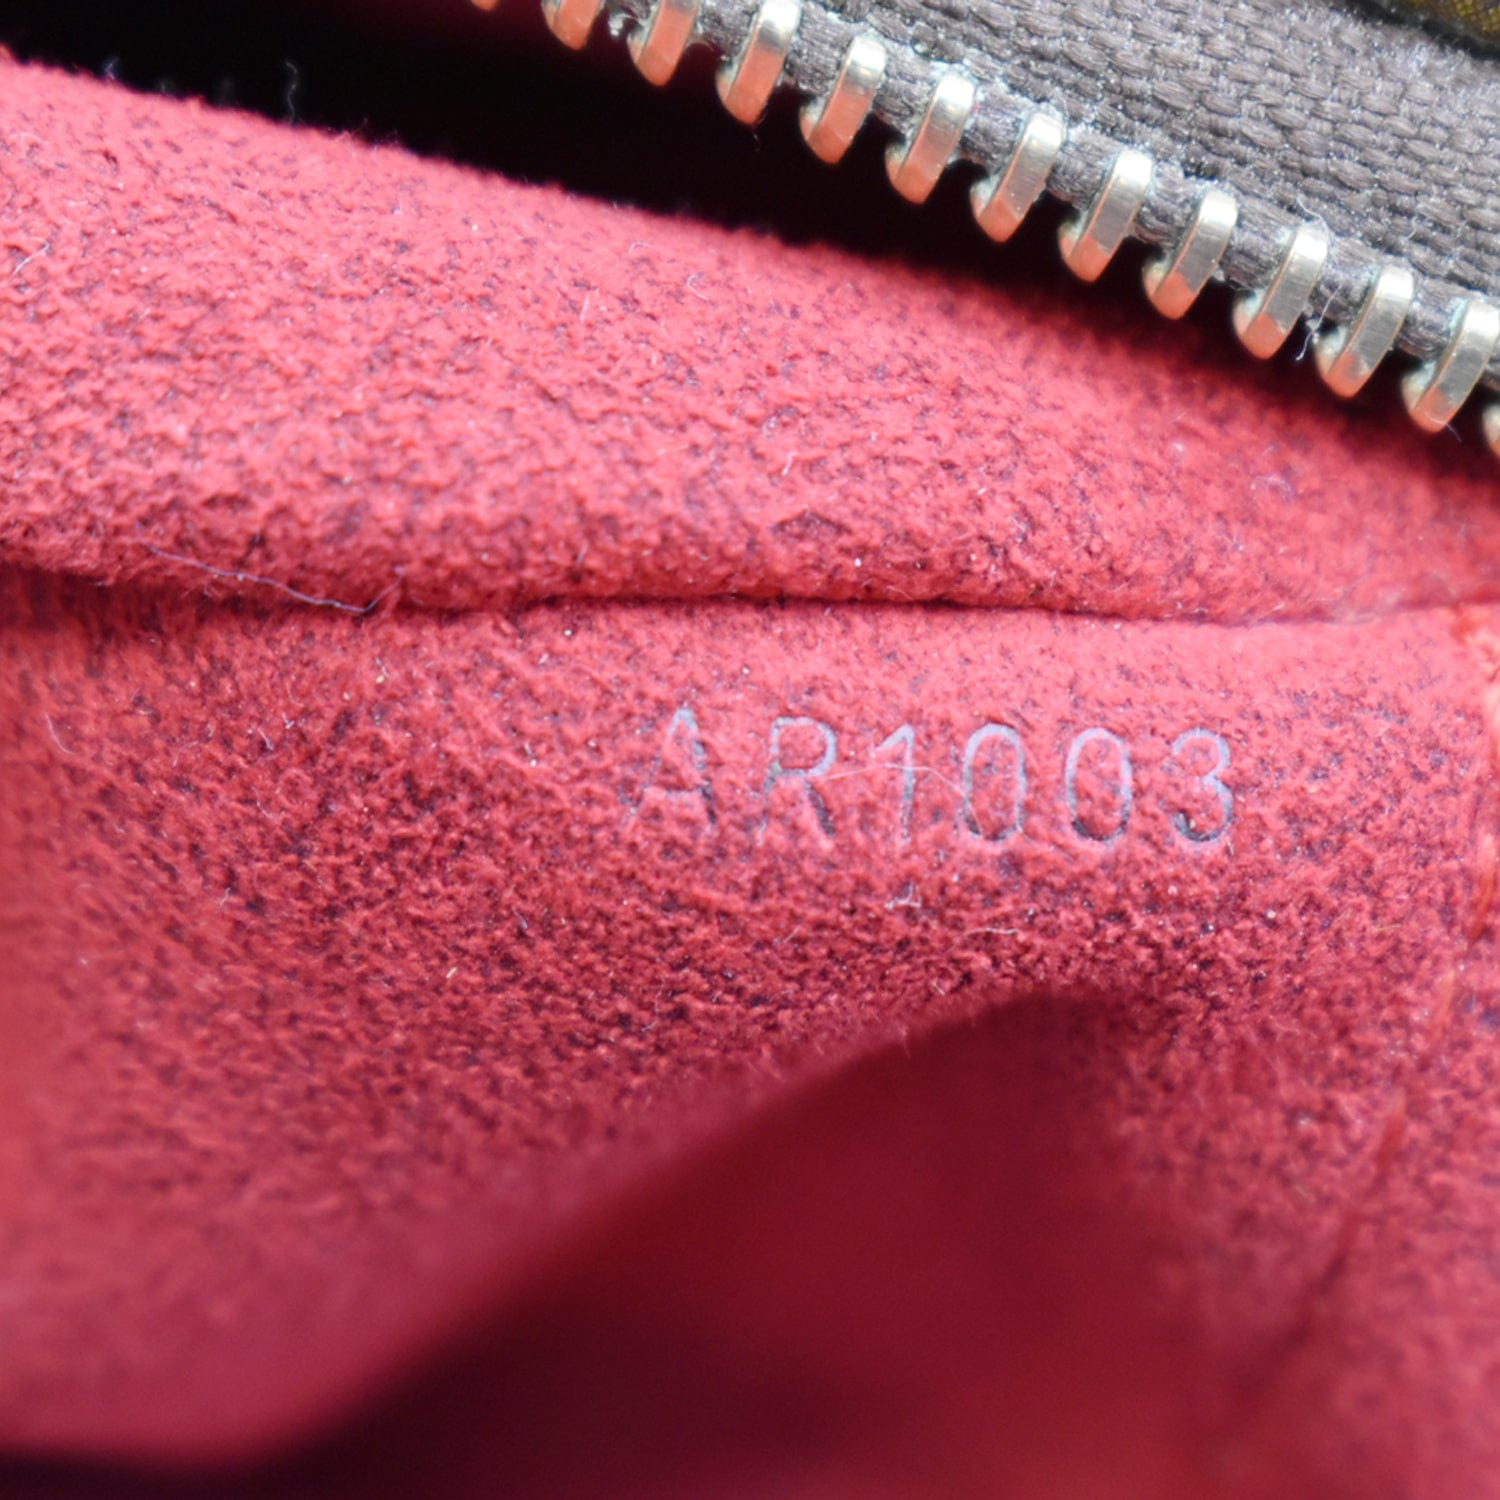 Brown Louis Vuitton Monogram Viva Cite GM Shoulder Bag – RvceShops Revival